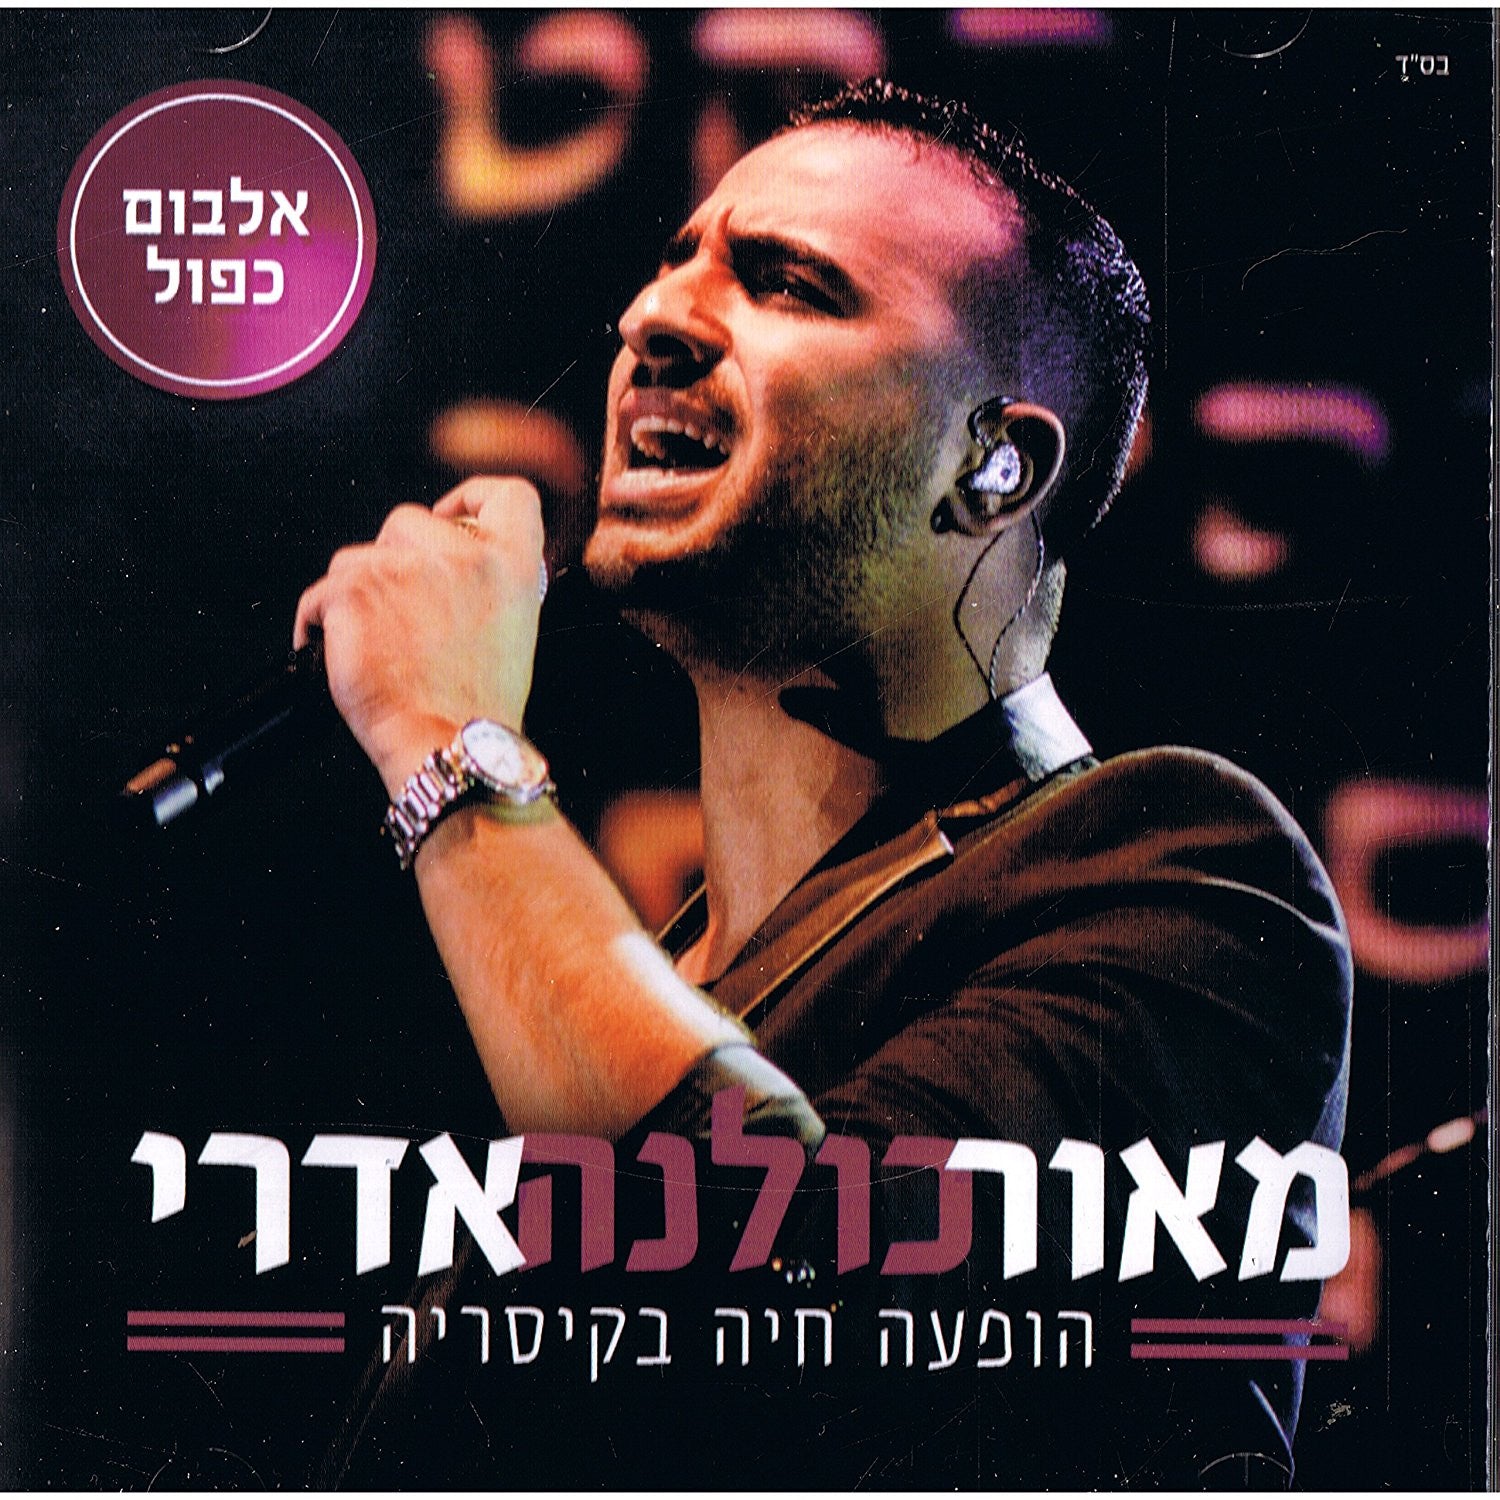 Maor Edri - Kulana Live in Caesarea (2CD's Set)